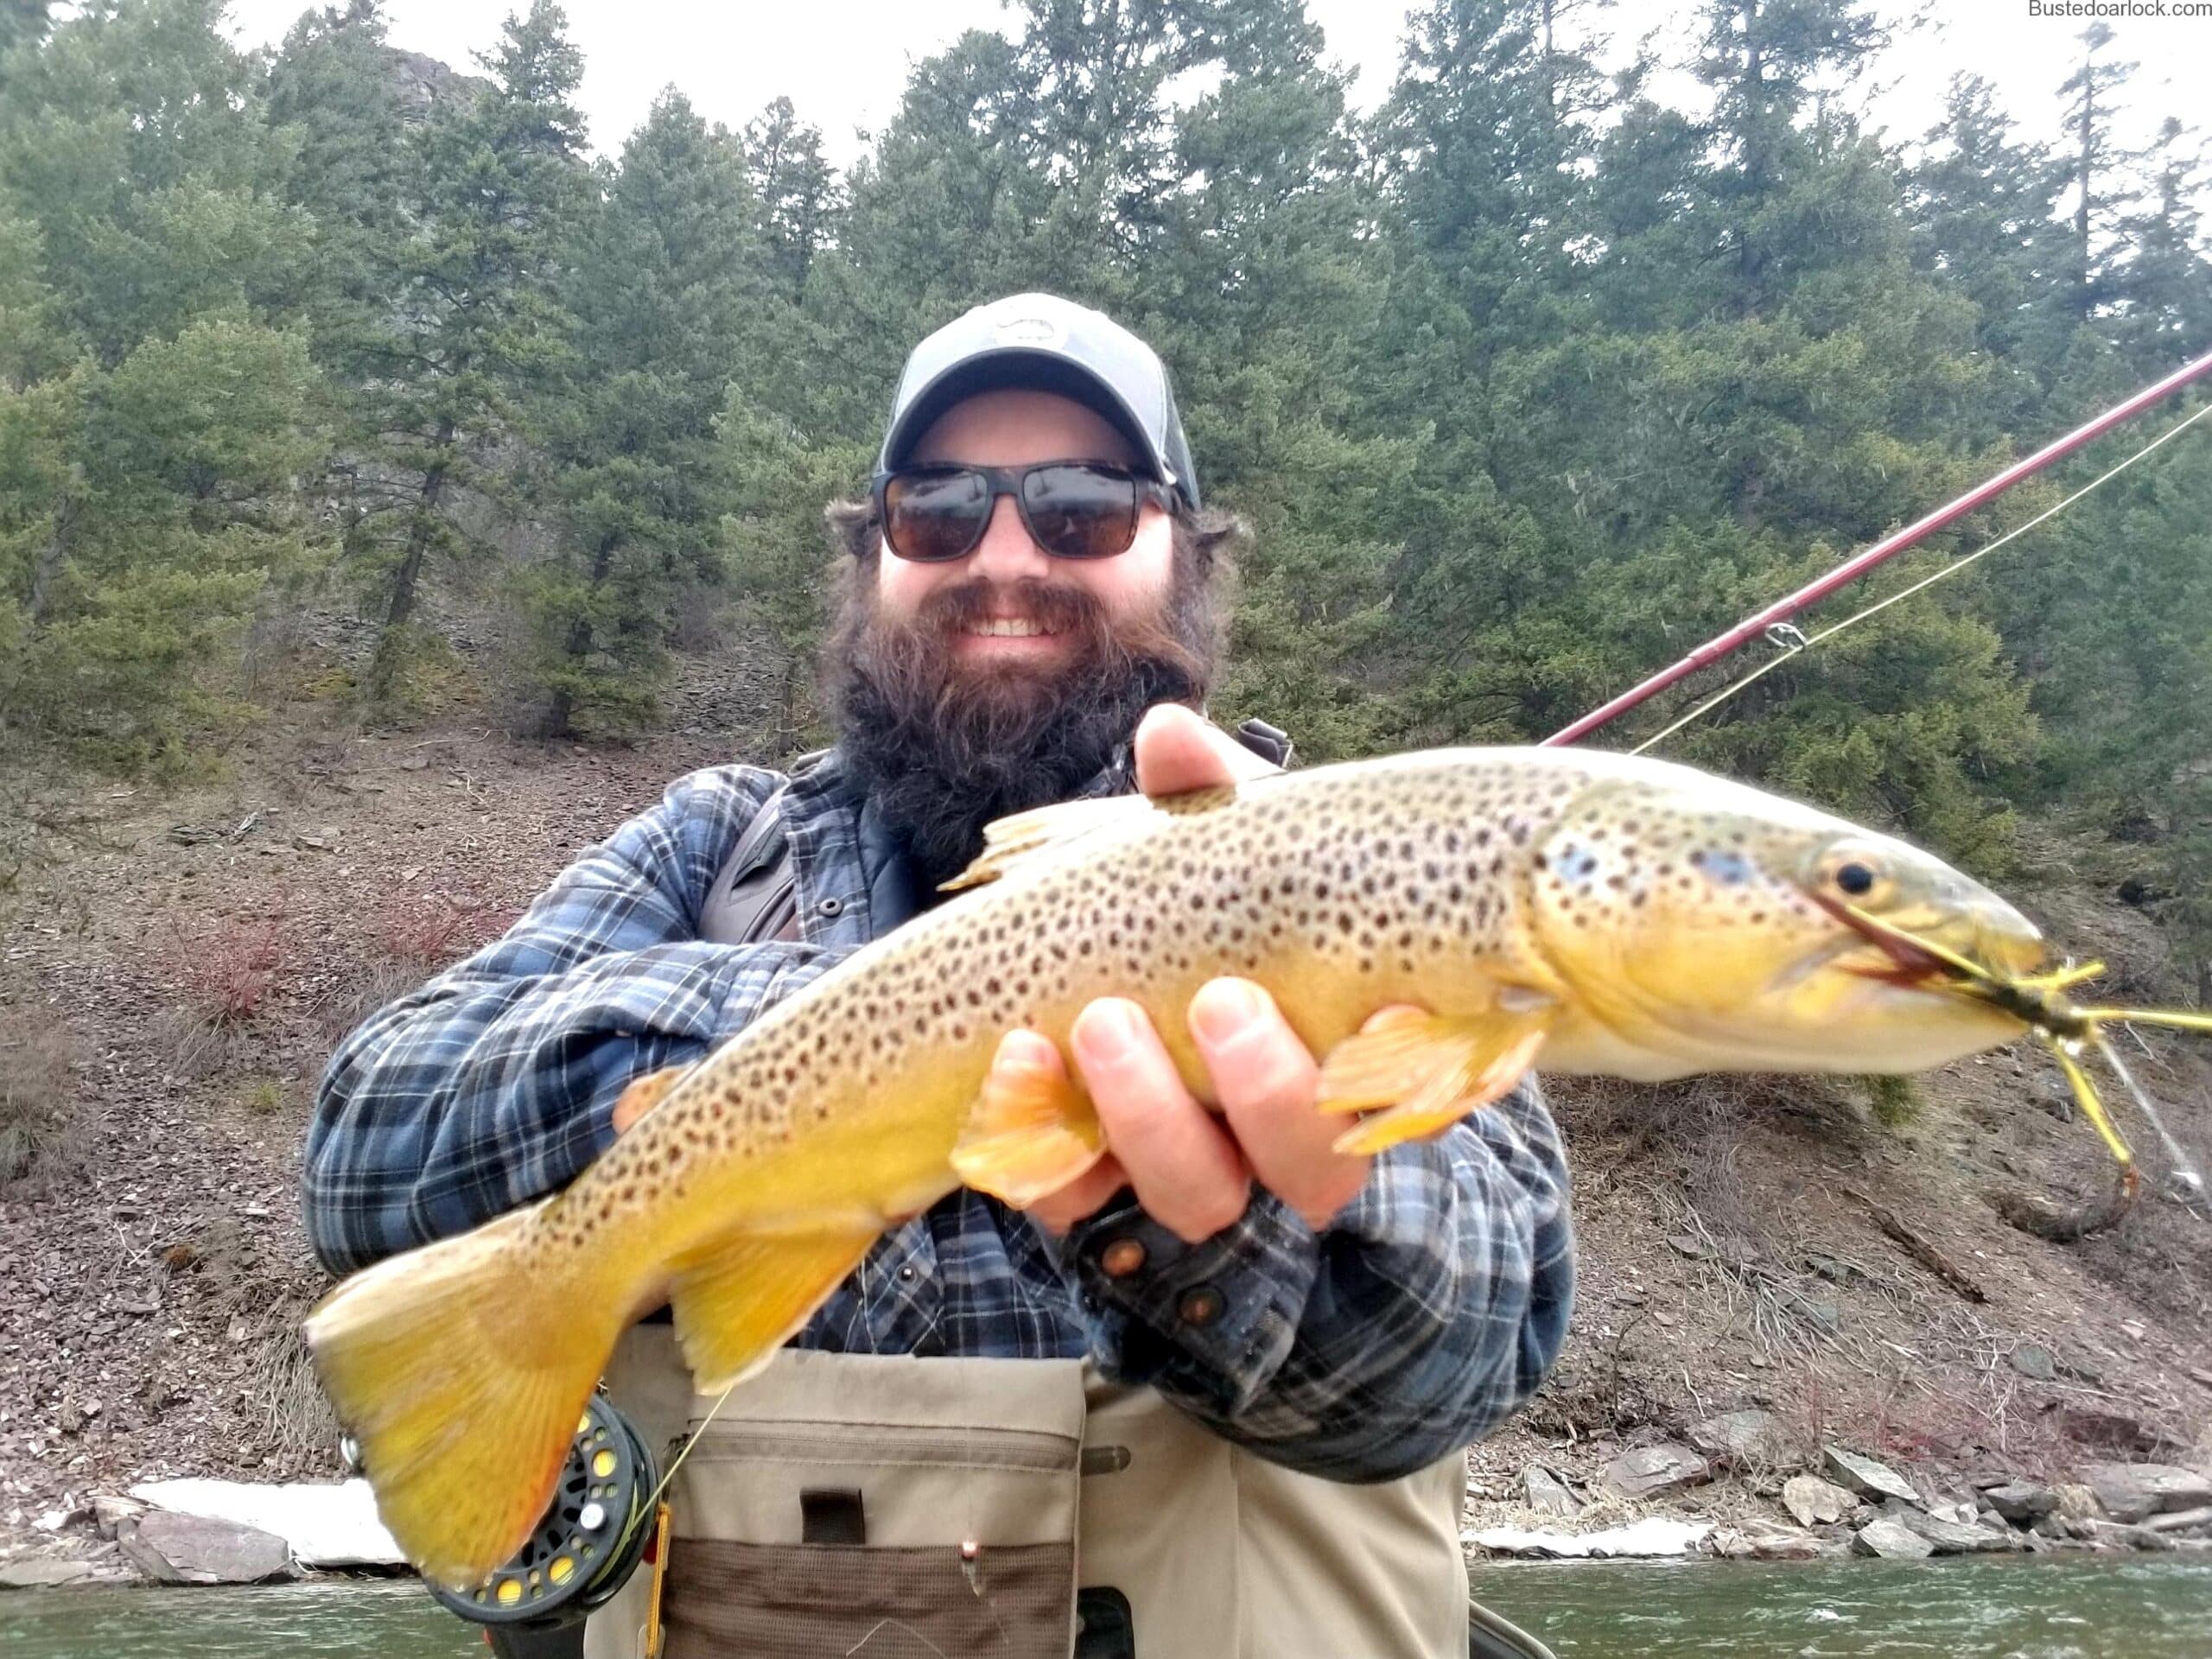 Rock Creek Montana: Flows, Weather and Fishing - Busted Oarlock